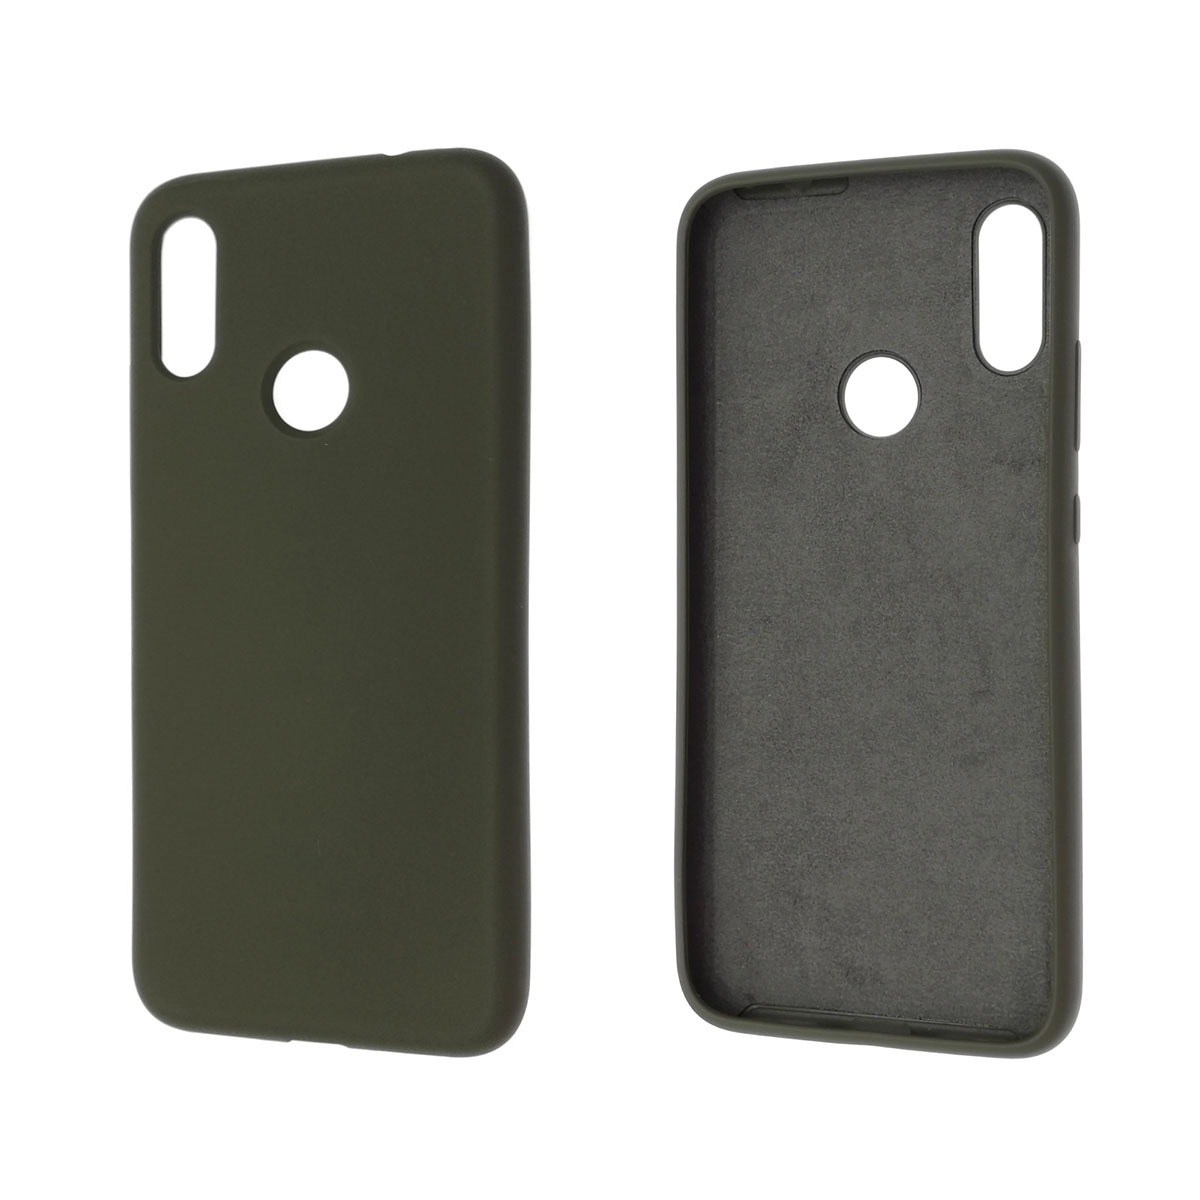 Чехол накладка Silicon Cover для XIAOMI Redmi Note 7, силикон, бархат, цвет болотный.